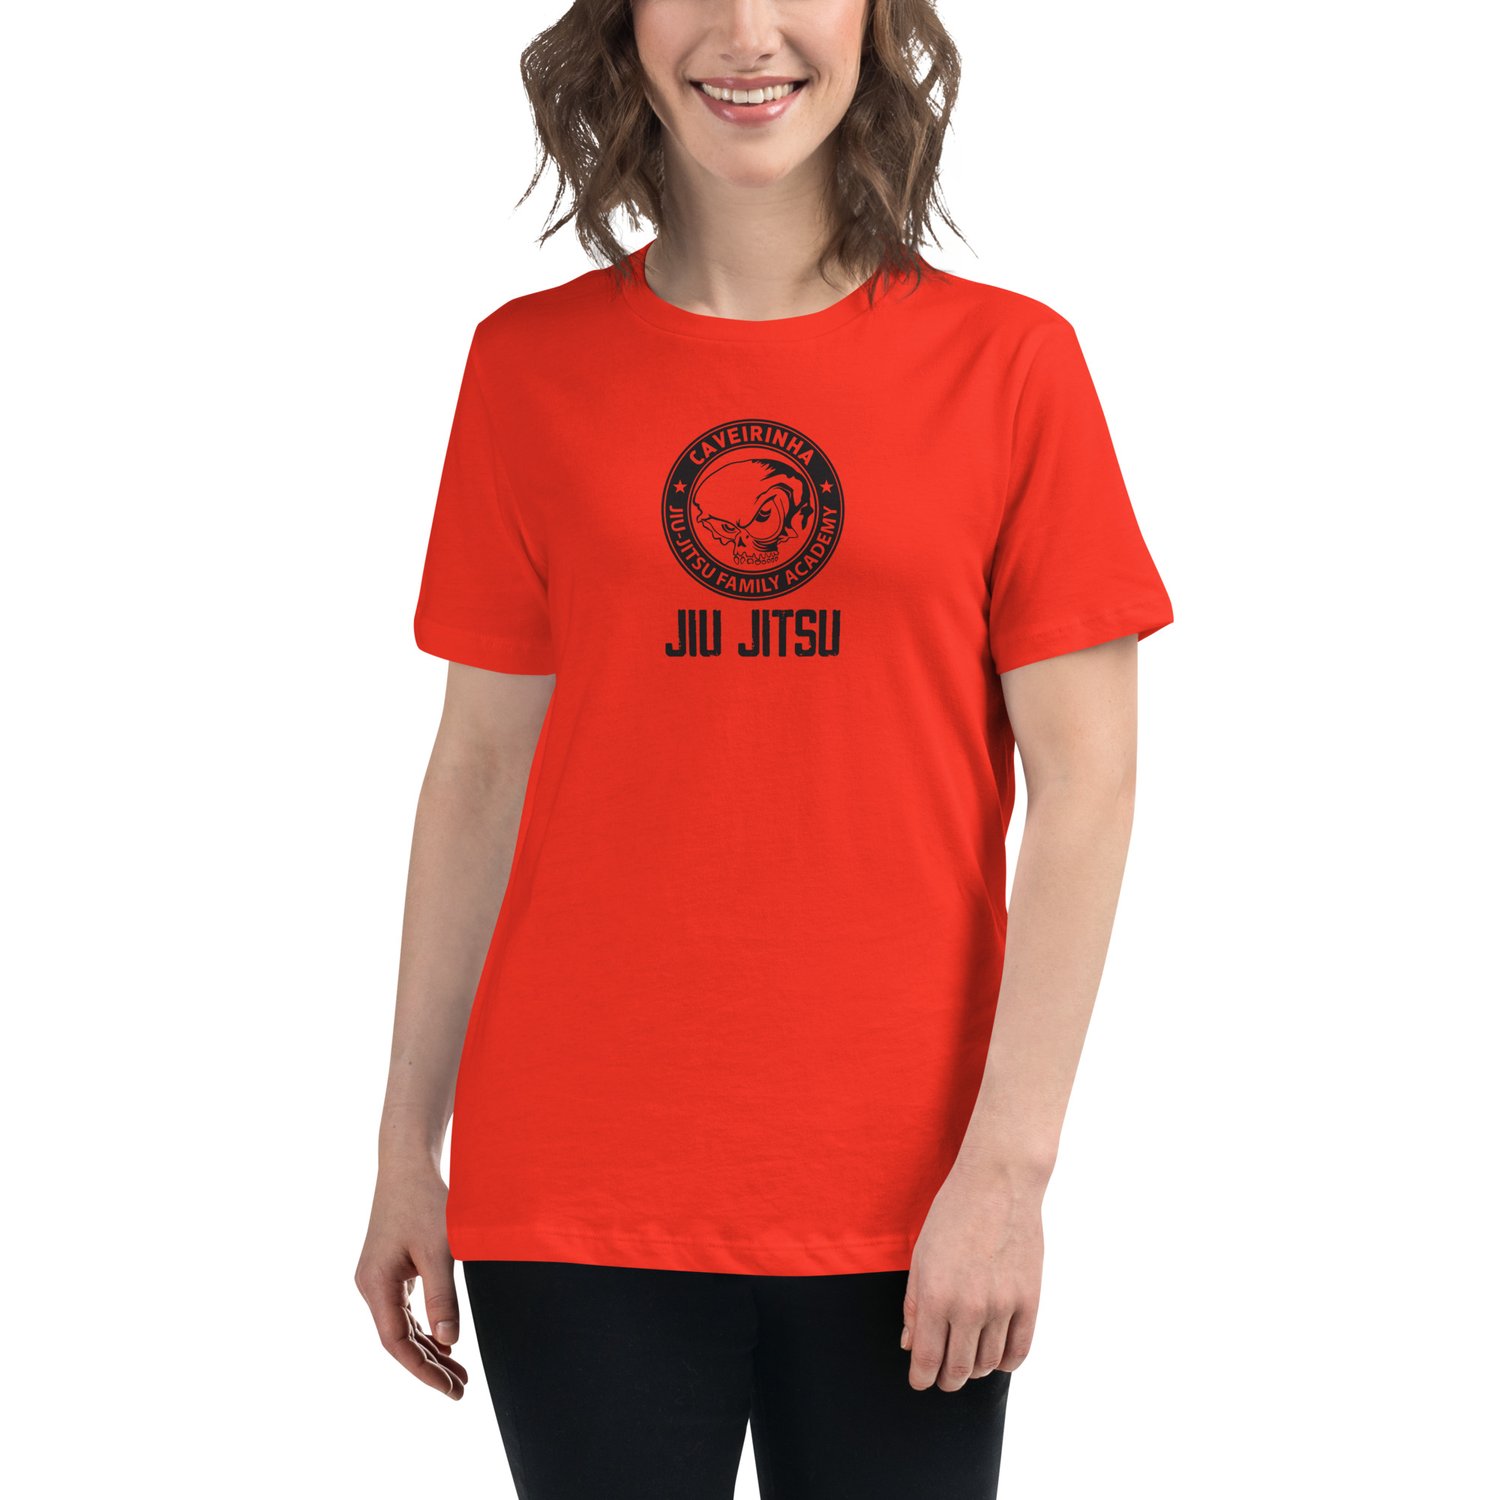 Camp Half-Blood All Cabins Womens T-Shirt